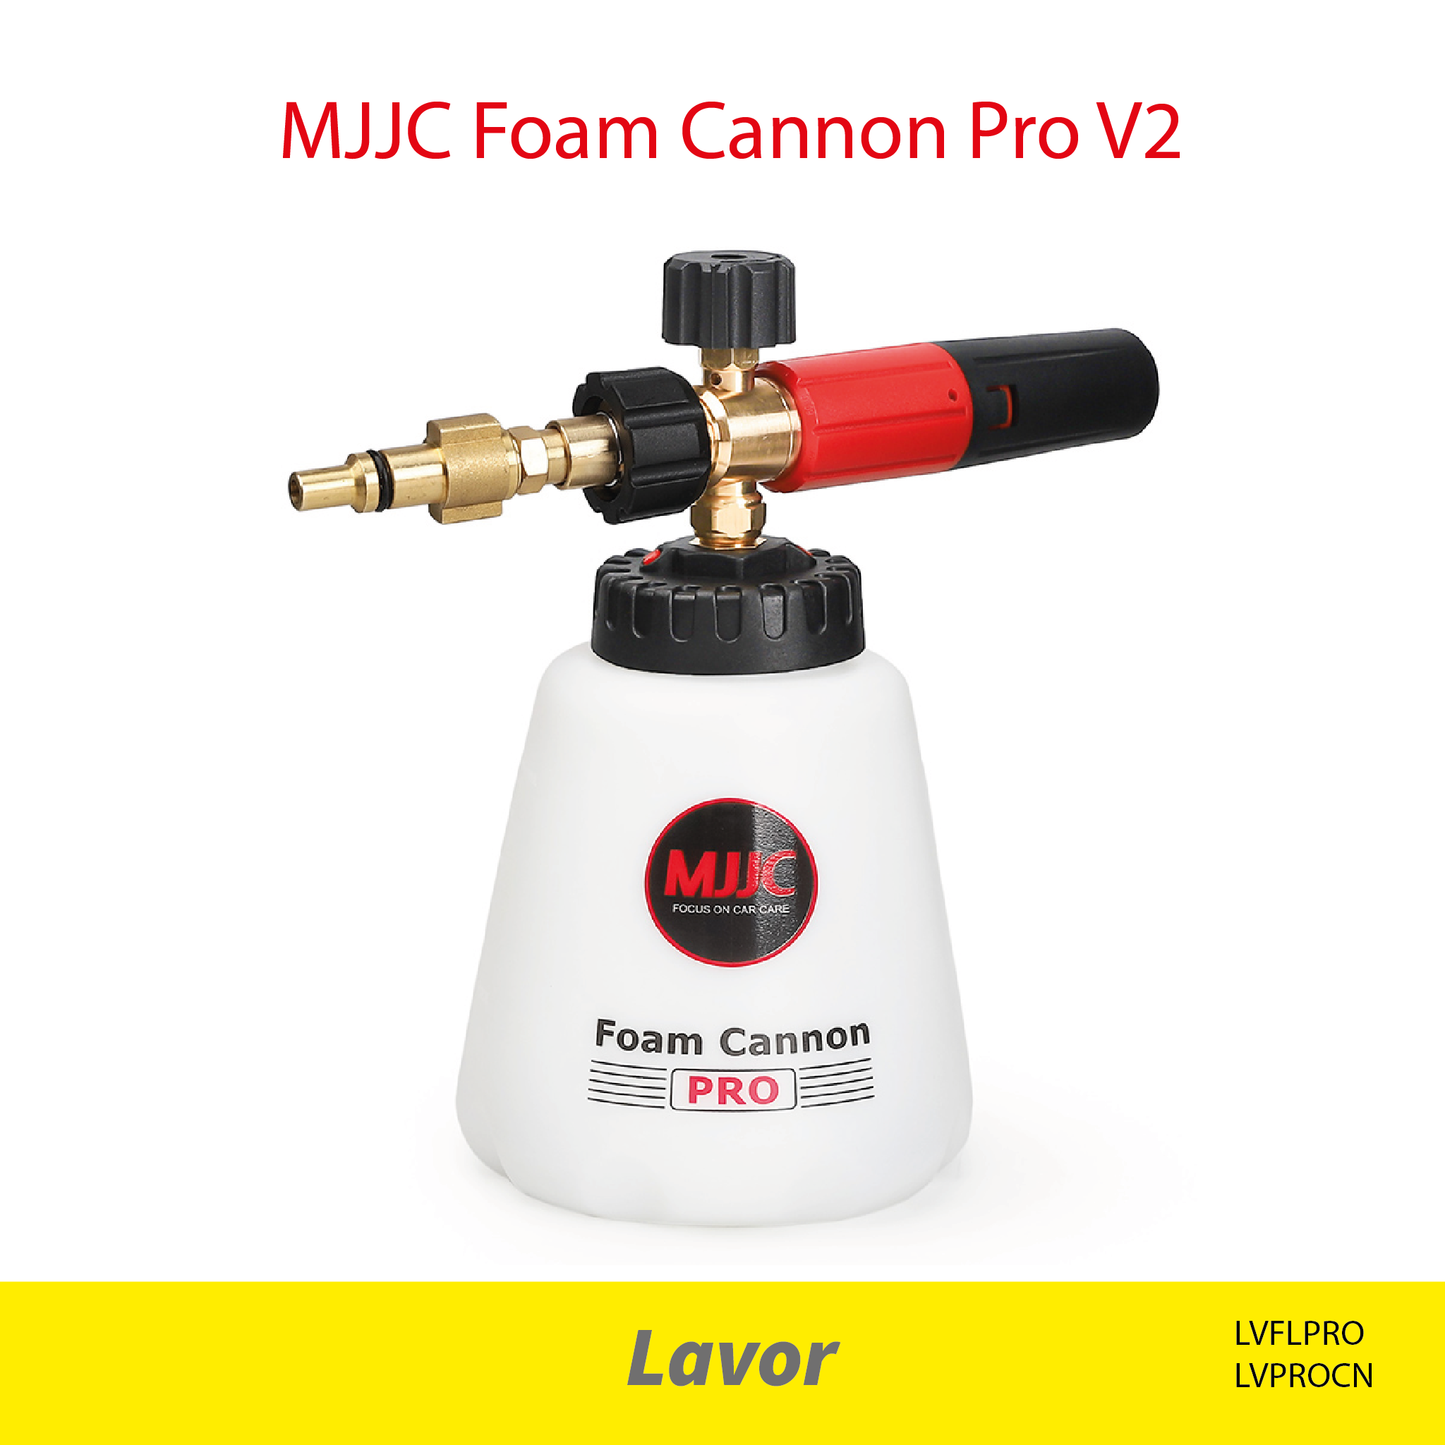 Lavor pressure washer - MJJC Foam Cannon Pro V2 (Pressure Washer Snow Foam Lance Gun)